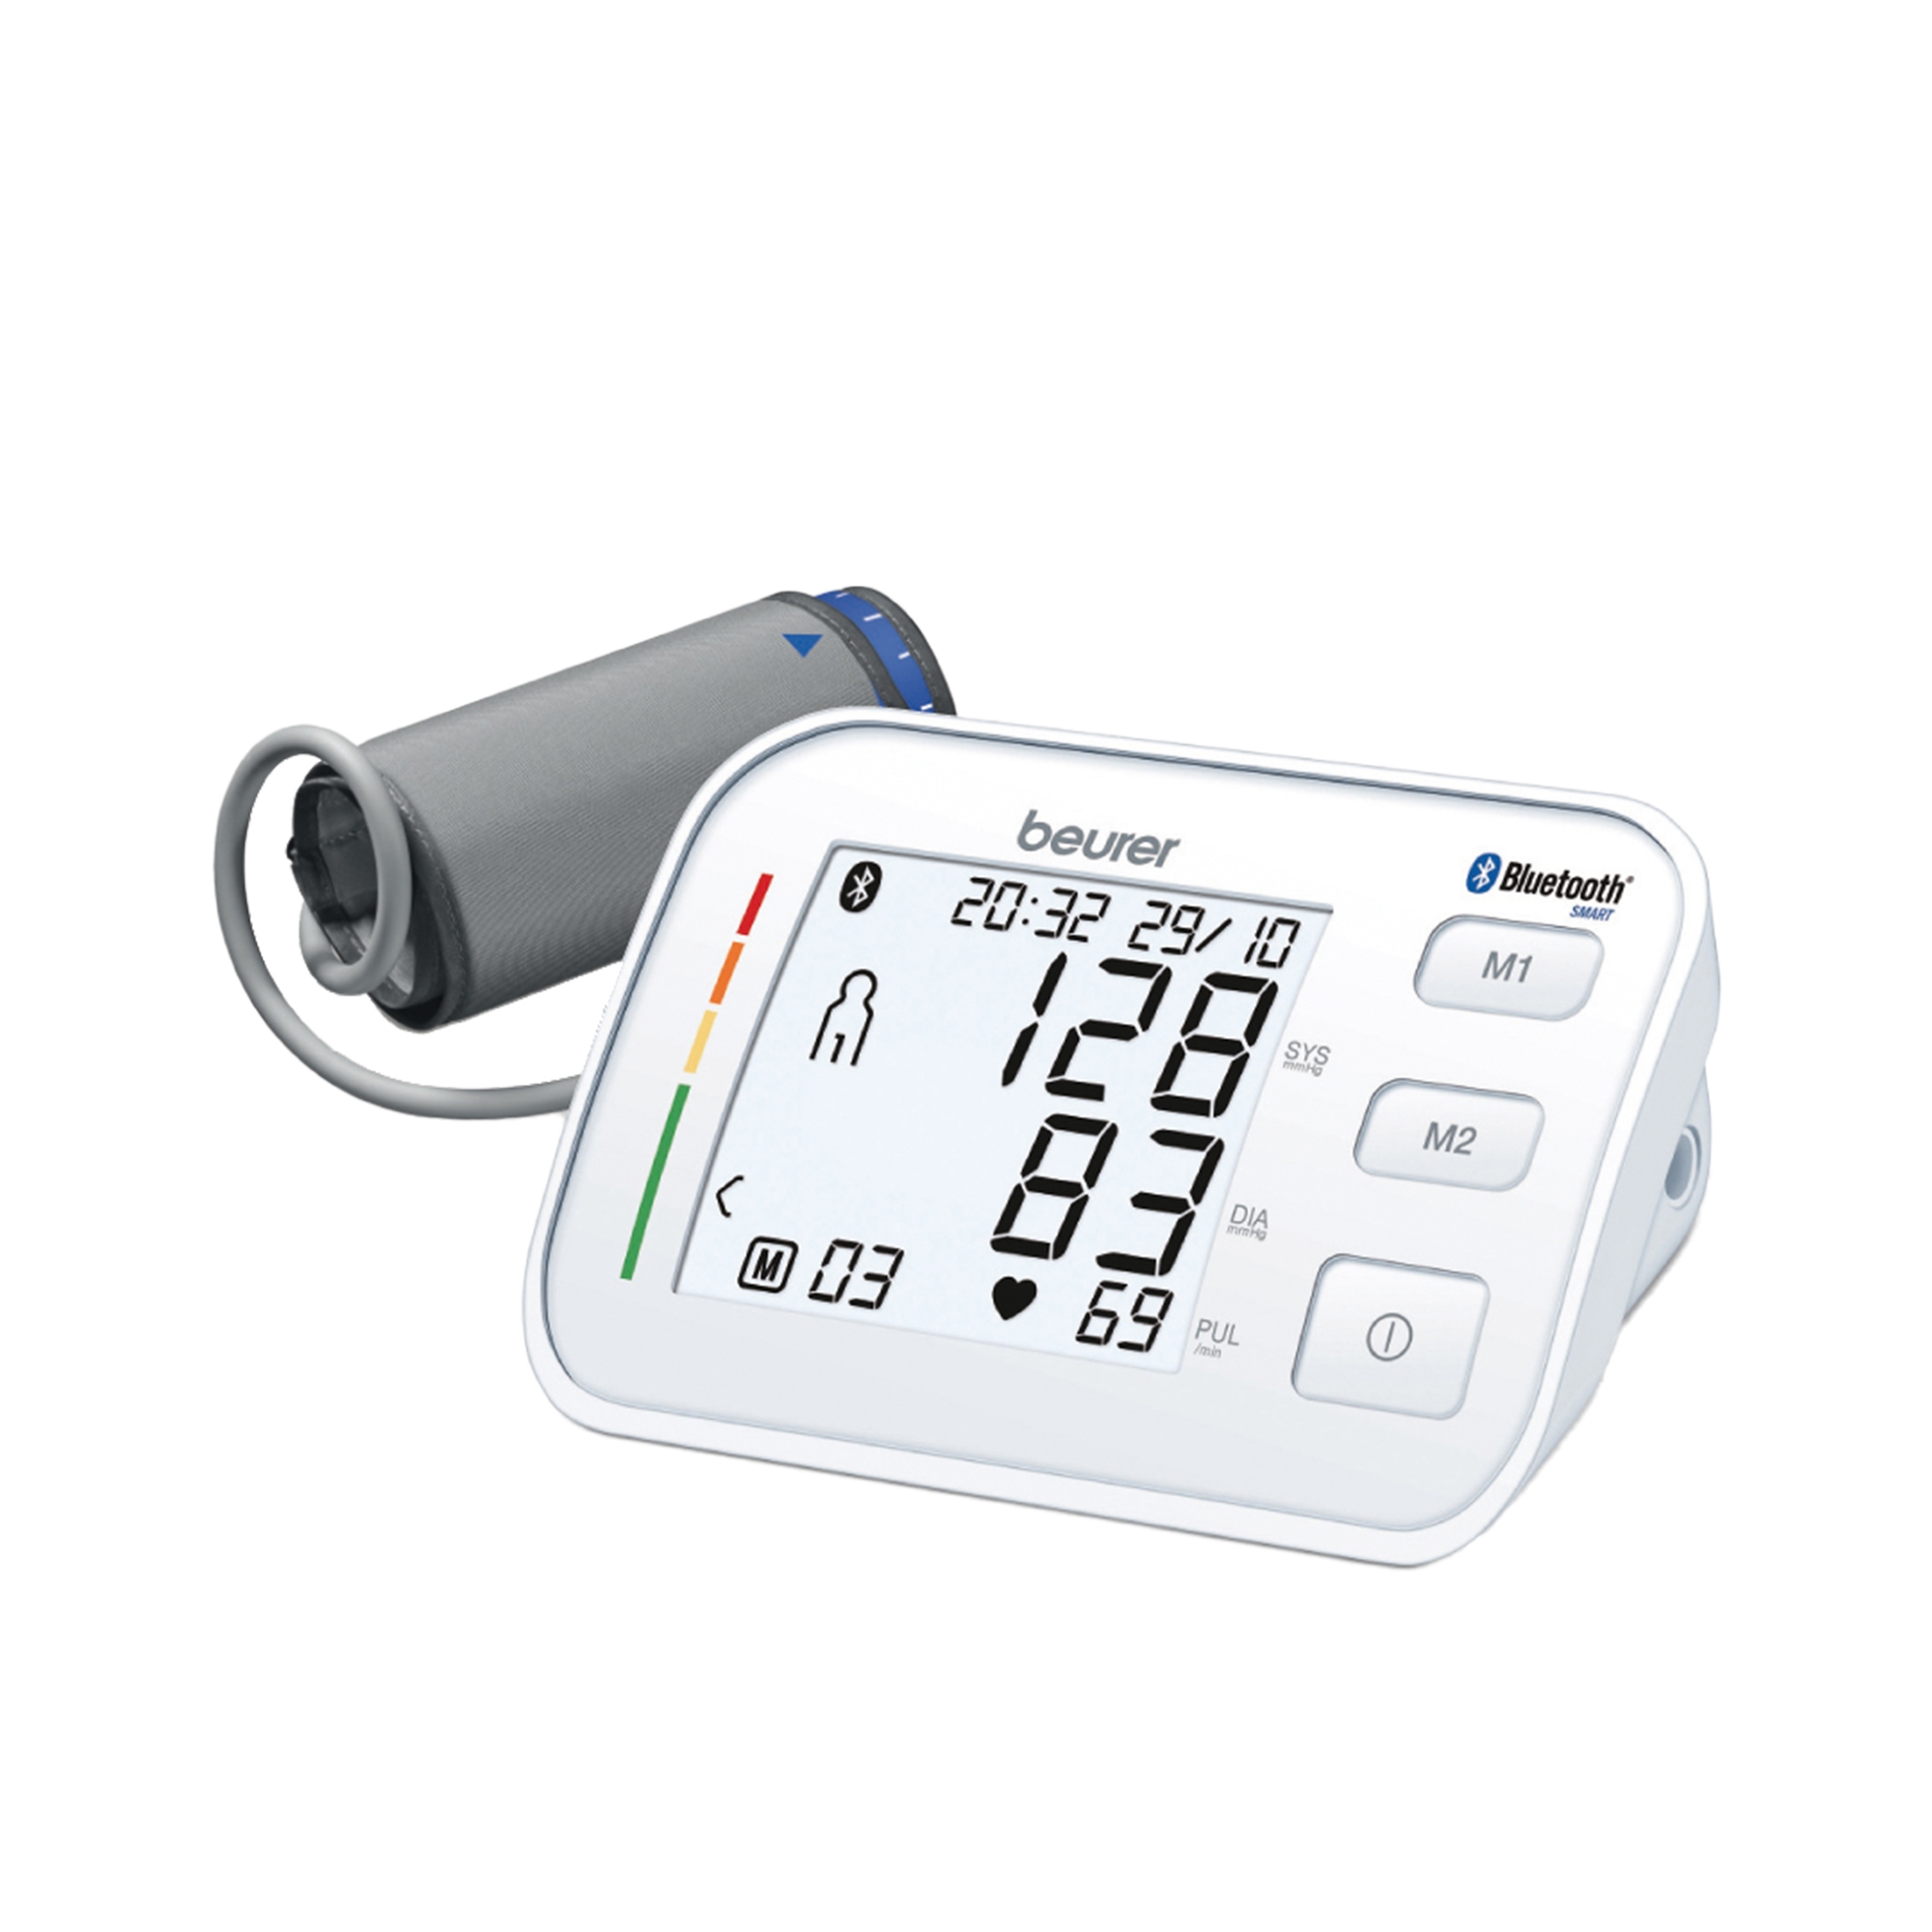 Beurer Bluetooth Upper Arm Blood Pressure Monitor Image 1